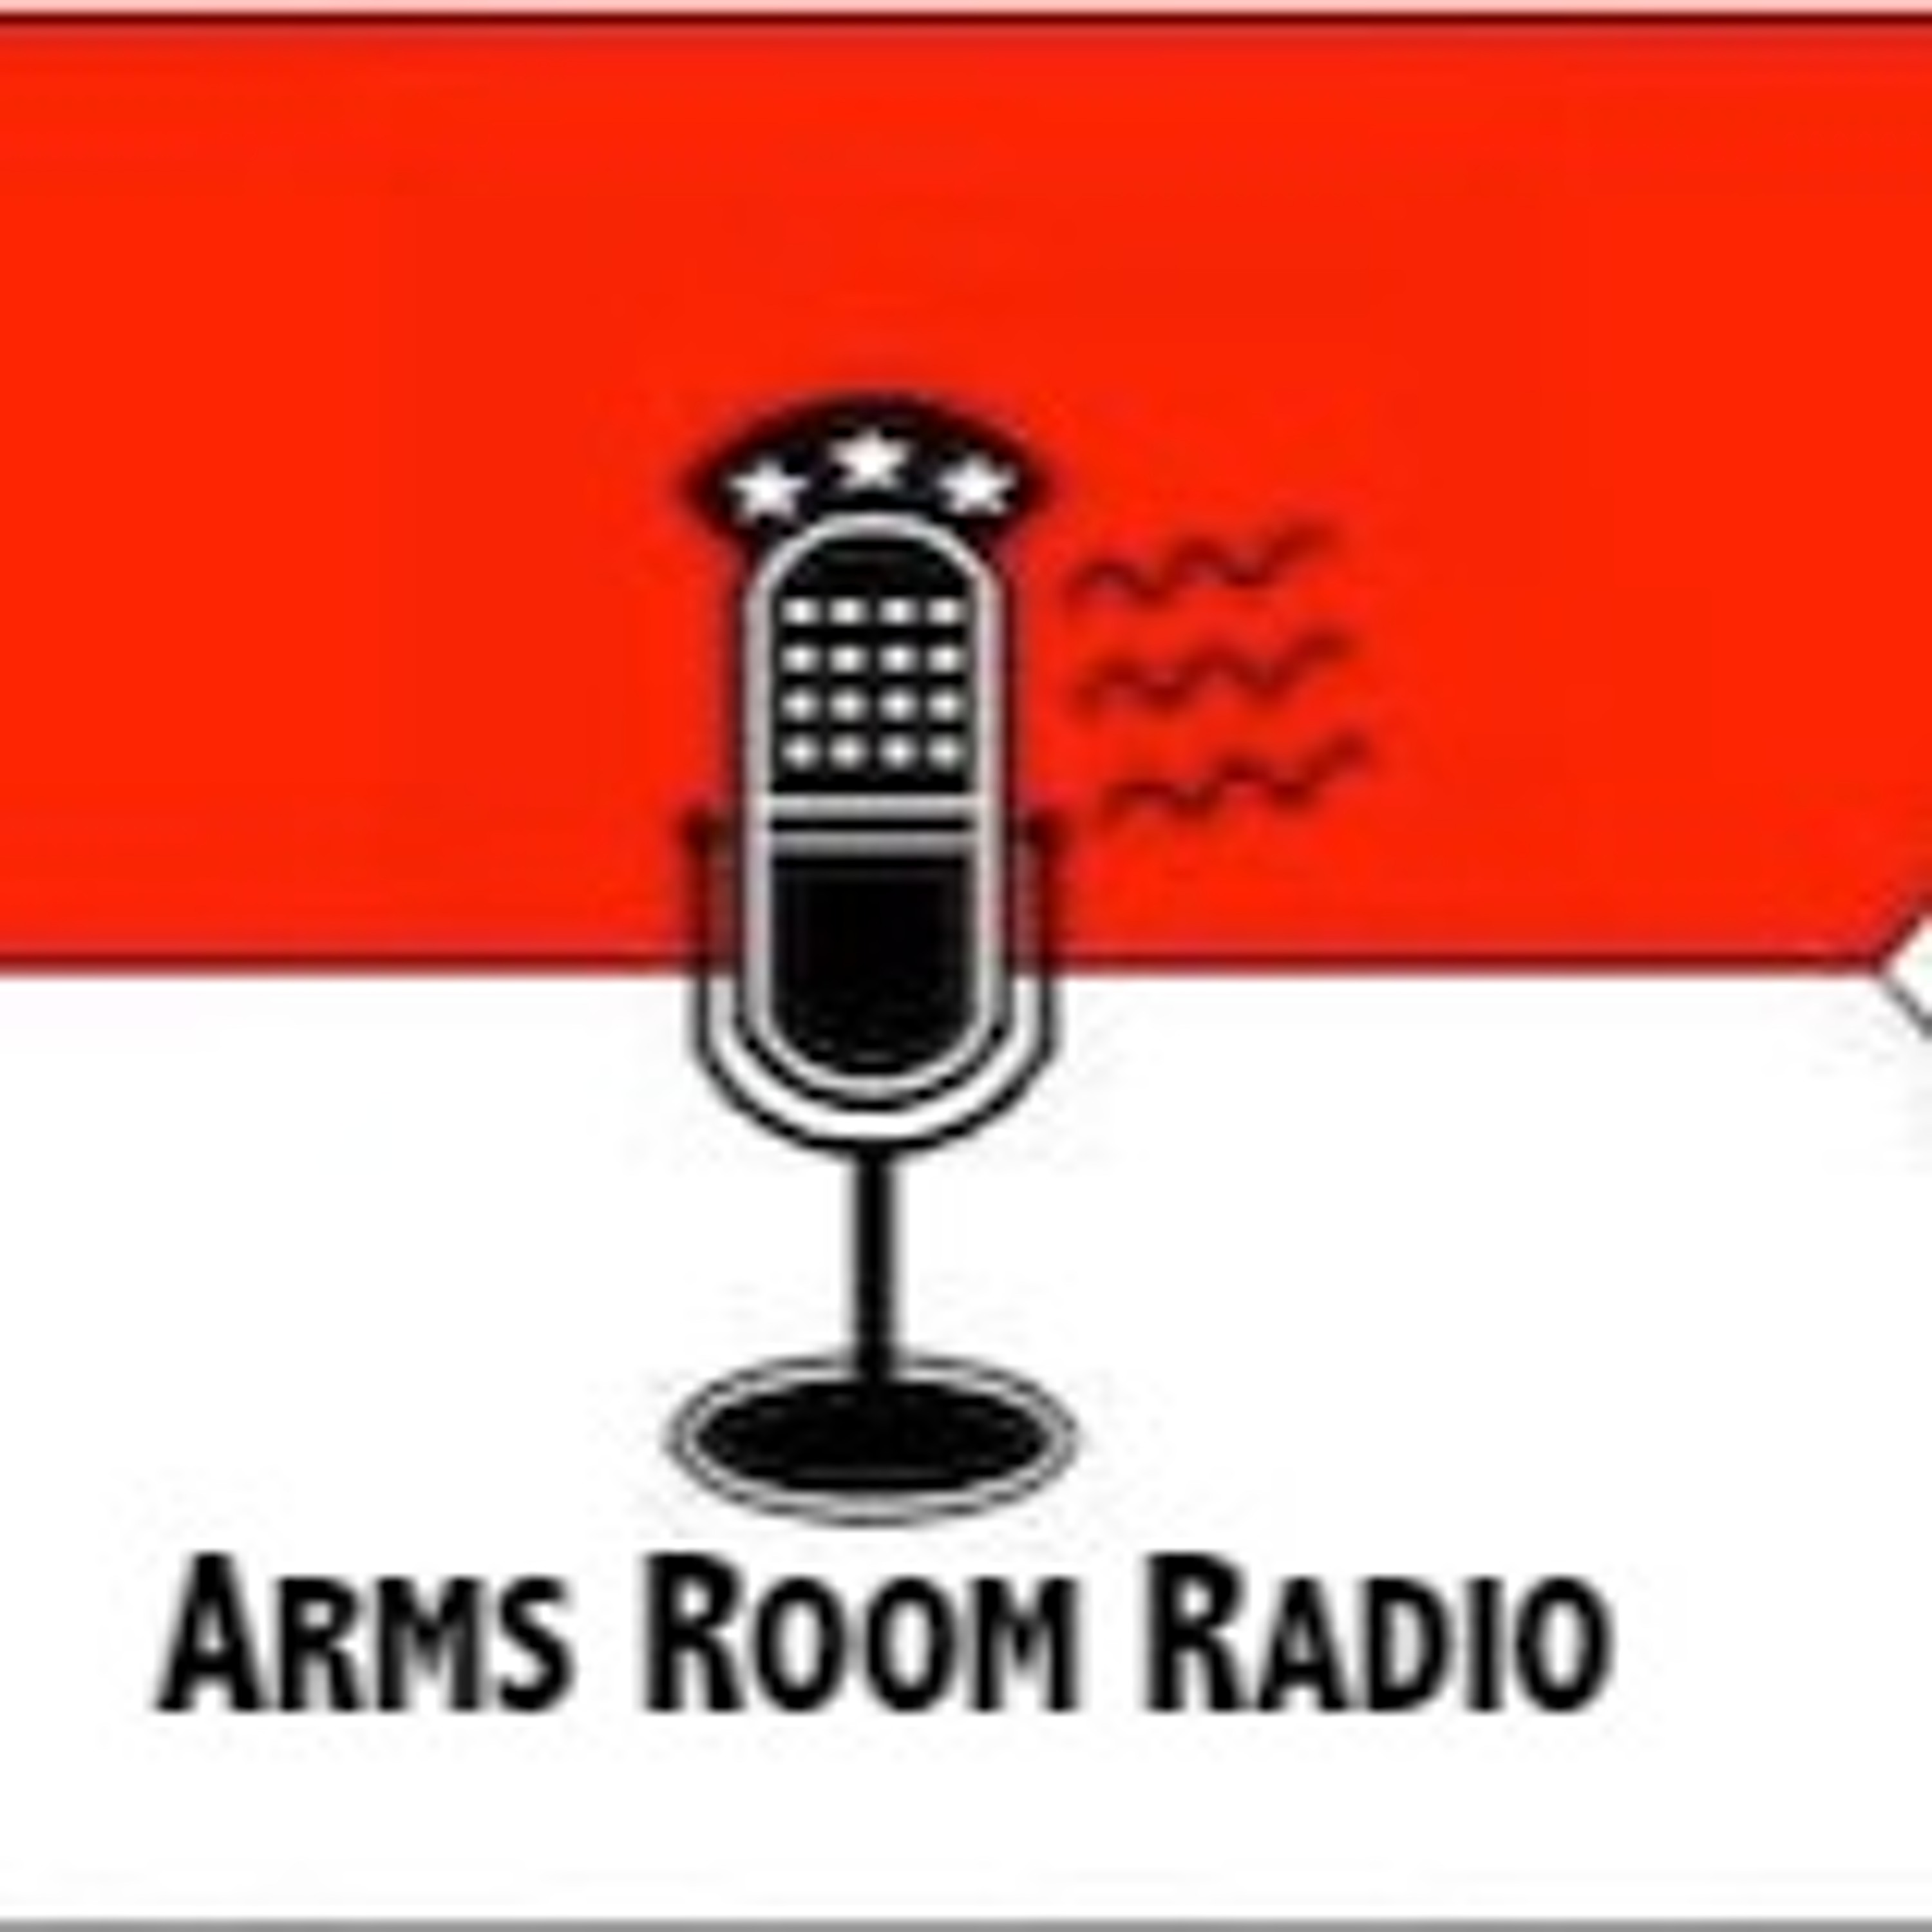 ArmsRoomRadio 02.02.19 Frontier Airlines, Alan Gottlieb